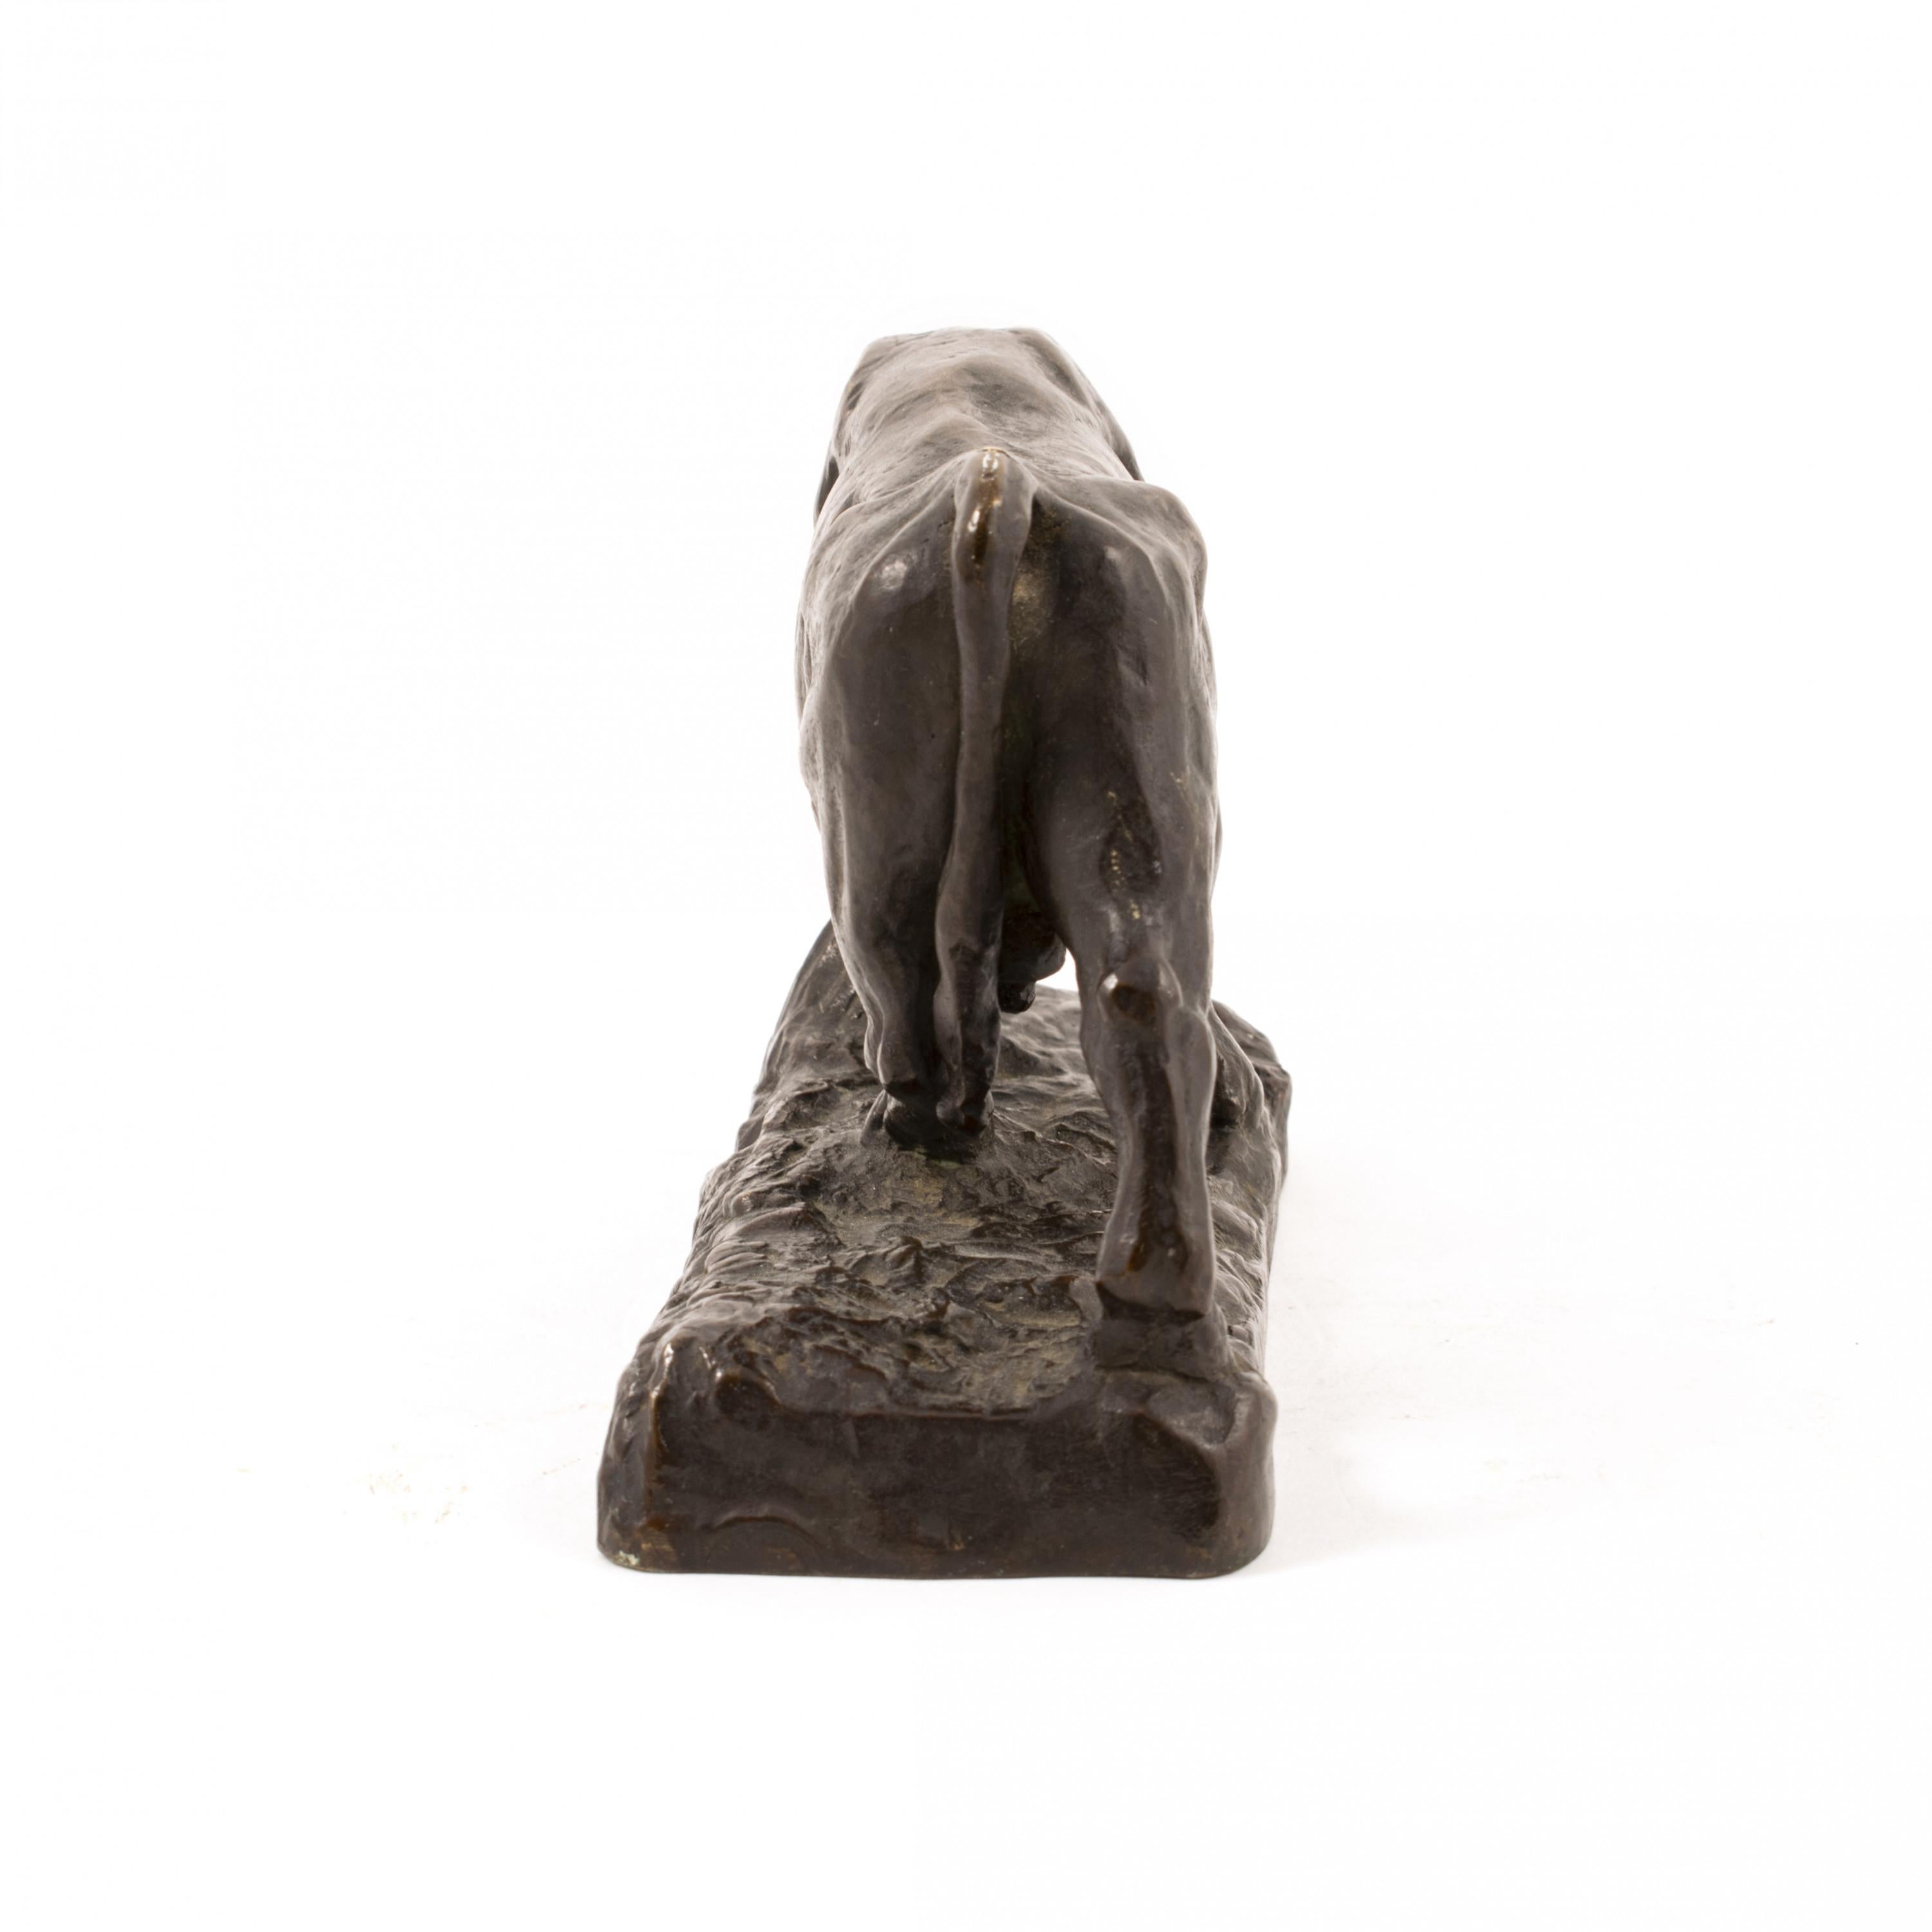 Other Anders Bundgaard, Miniature Sculpture of an Ox in Patinated Bronze